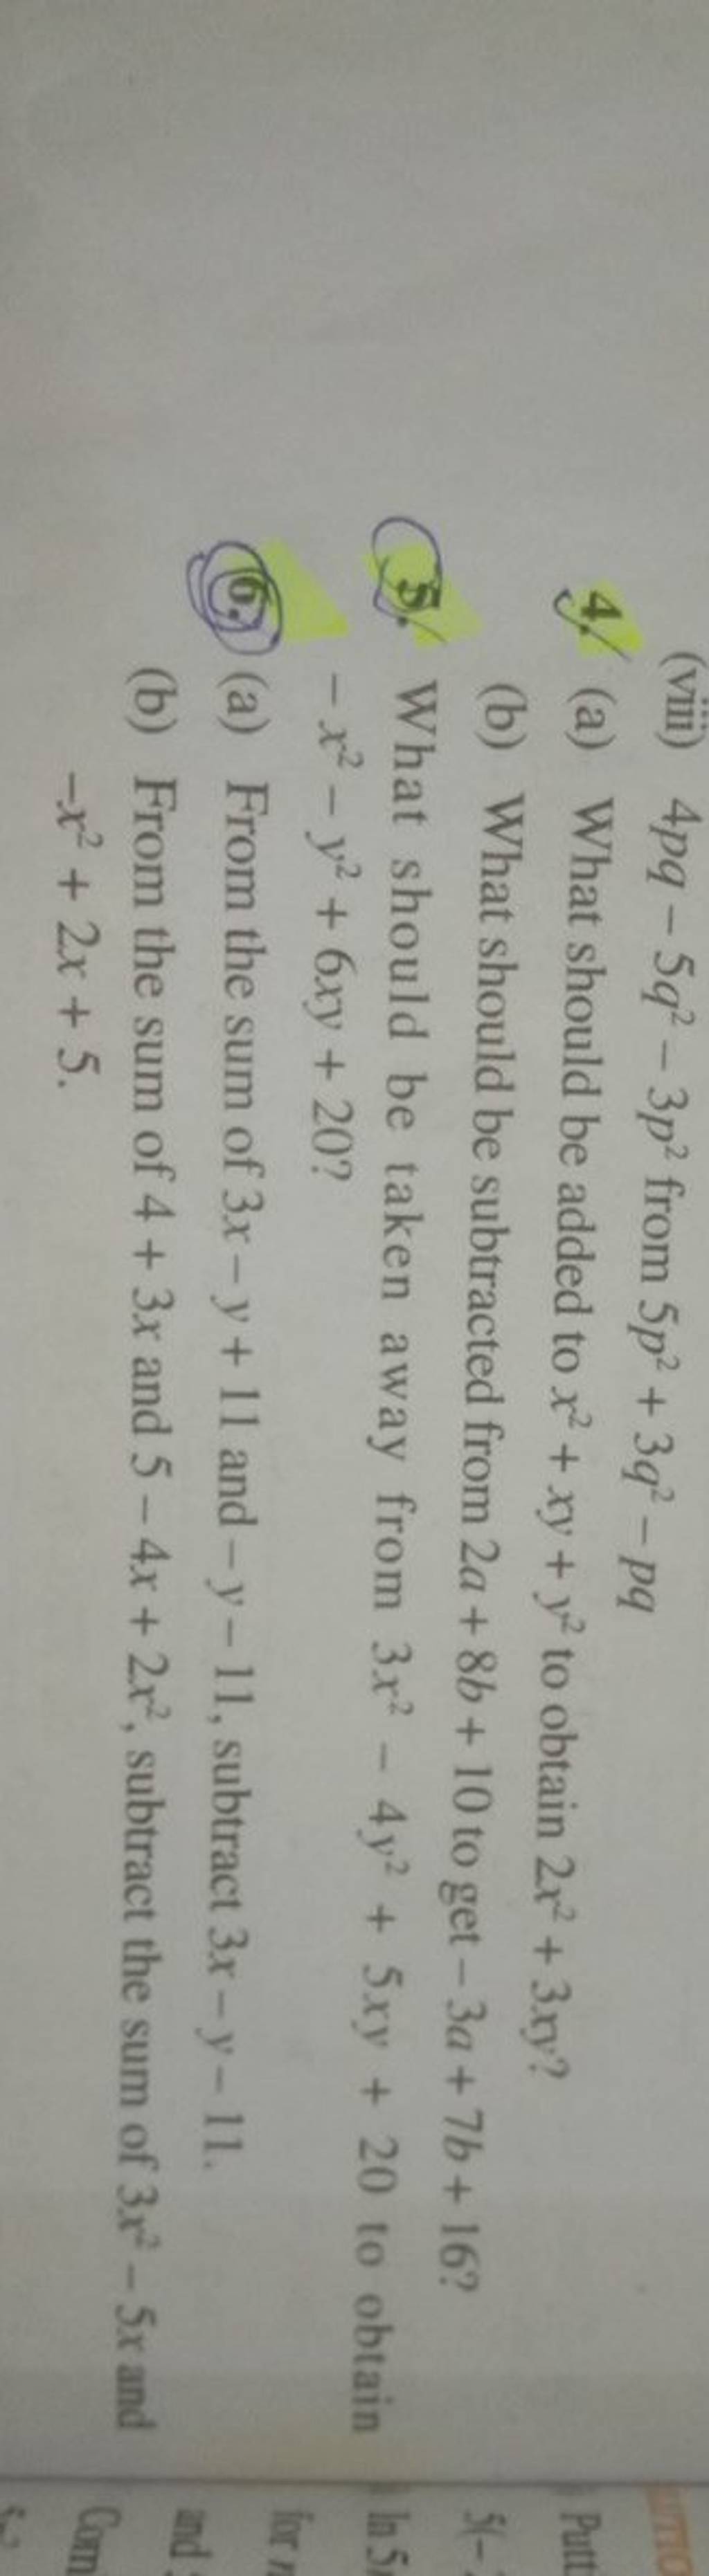 (viii) 4pq−5q2−3p2 from 5p2+3q2−pq
4. (a) What should be added to x2+x